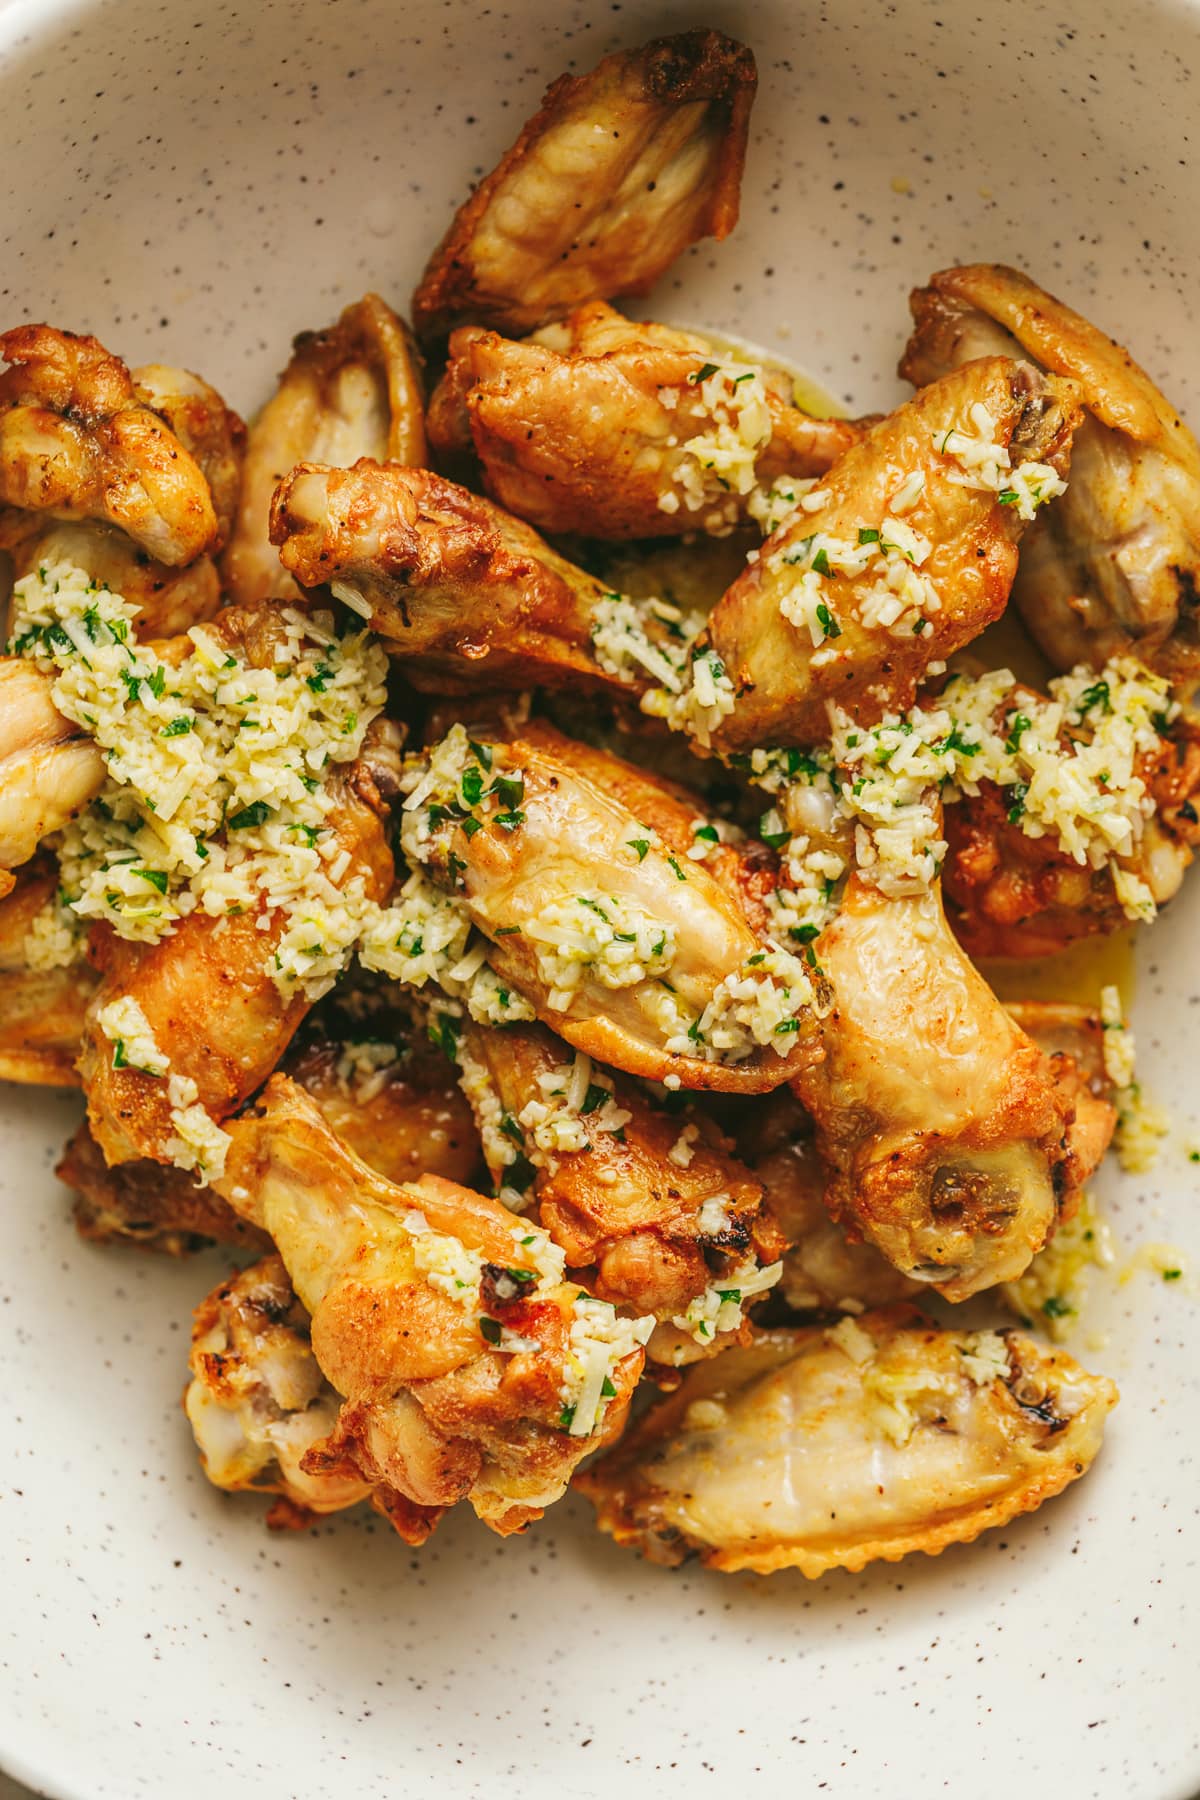 Keto chicken wings being tossed in garlic parmesan sauce.